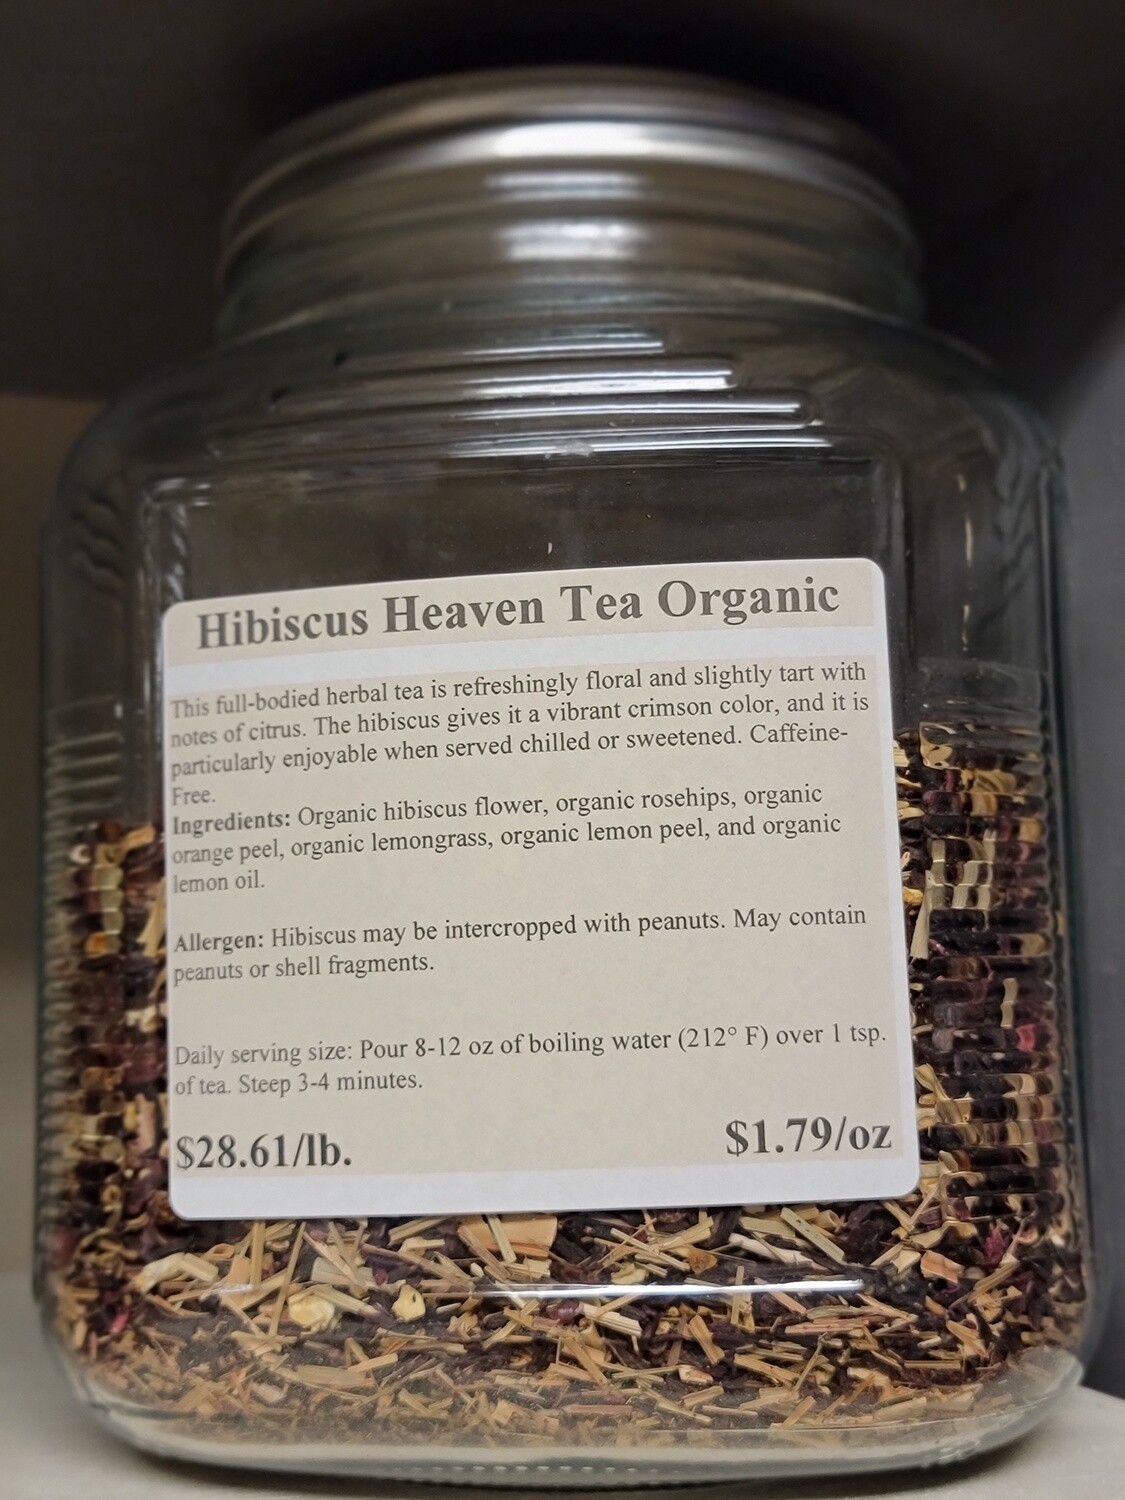 Hibiscus Heaven Tea /oz